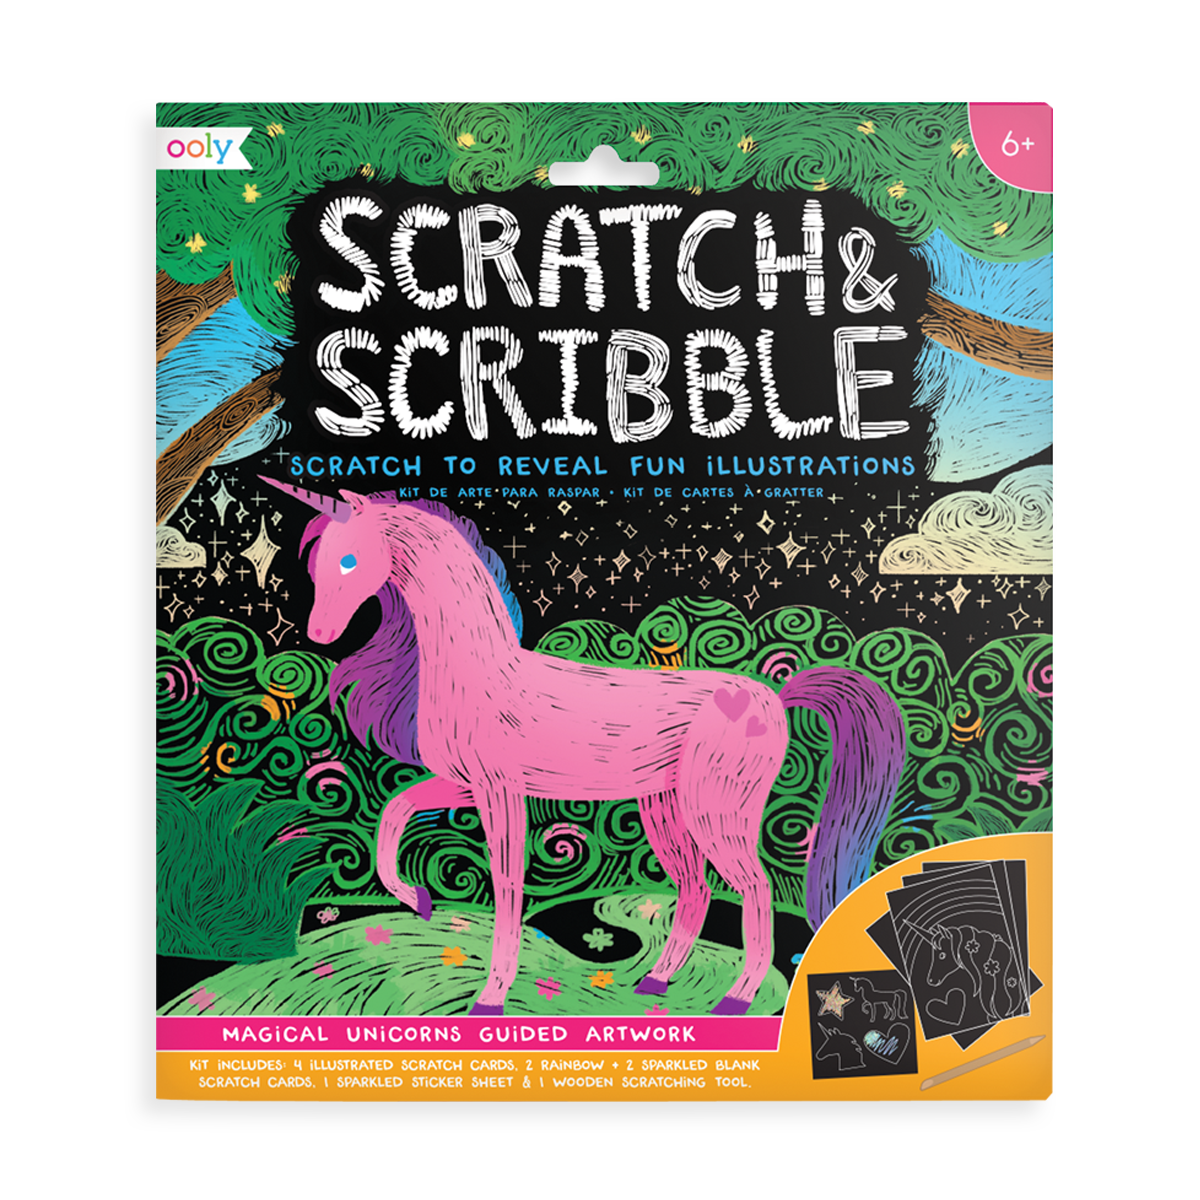 Scratch & Scribble - Fantastic Dragons